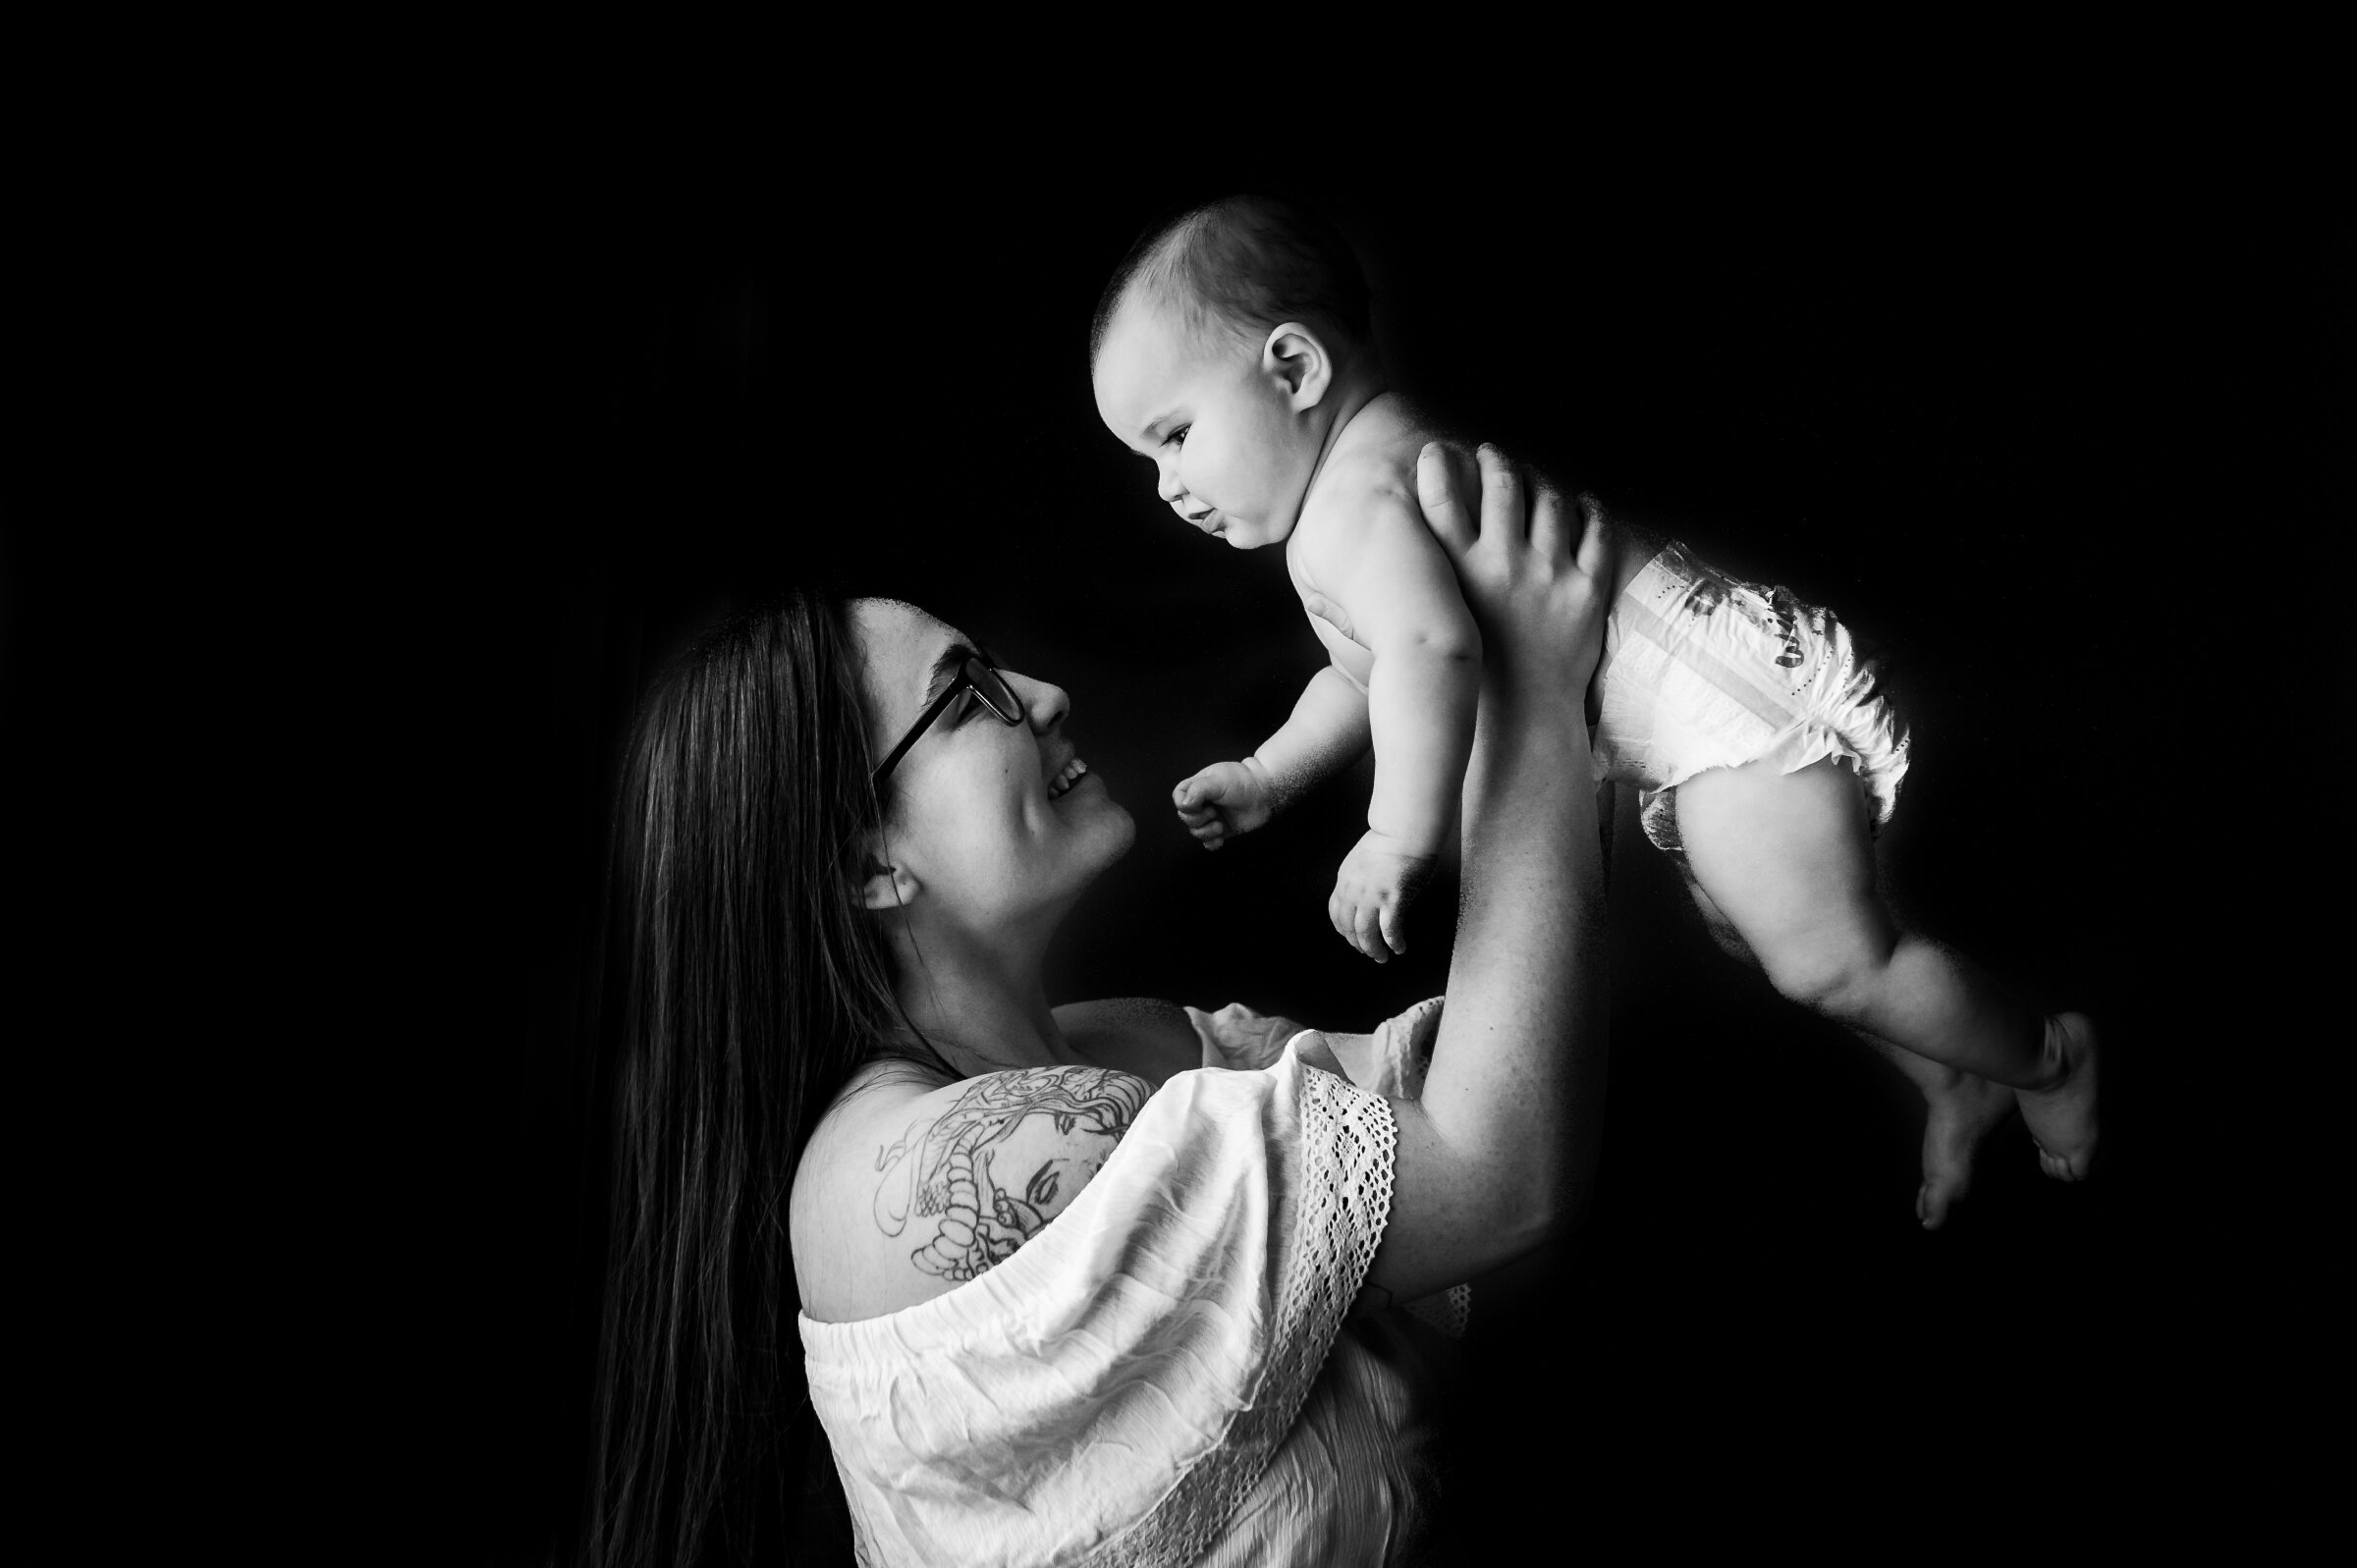 Wausau motherhood photographer Madison motherhood photographer Milwaukee motherhood photographer Wisconsin motherhood photographer breastfeeding photographer